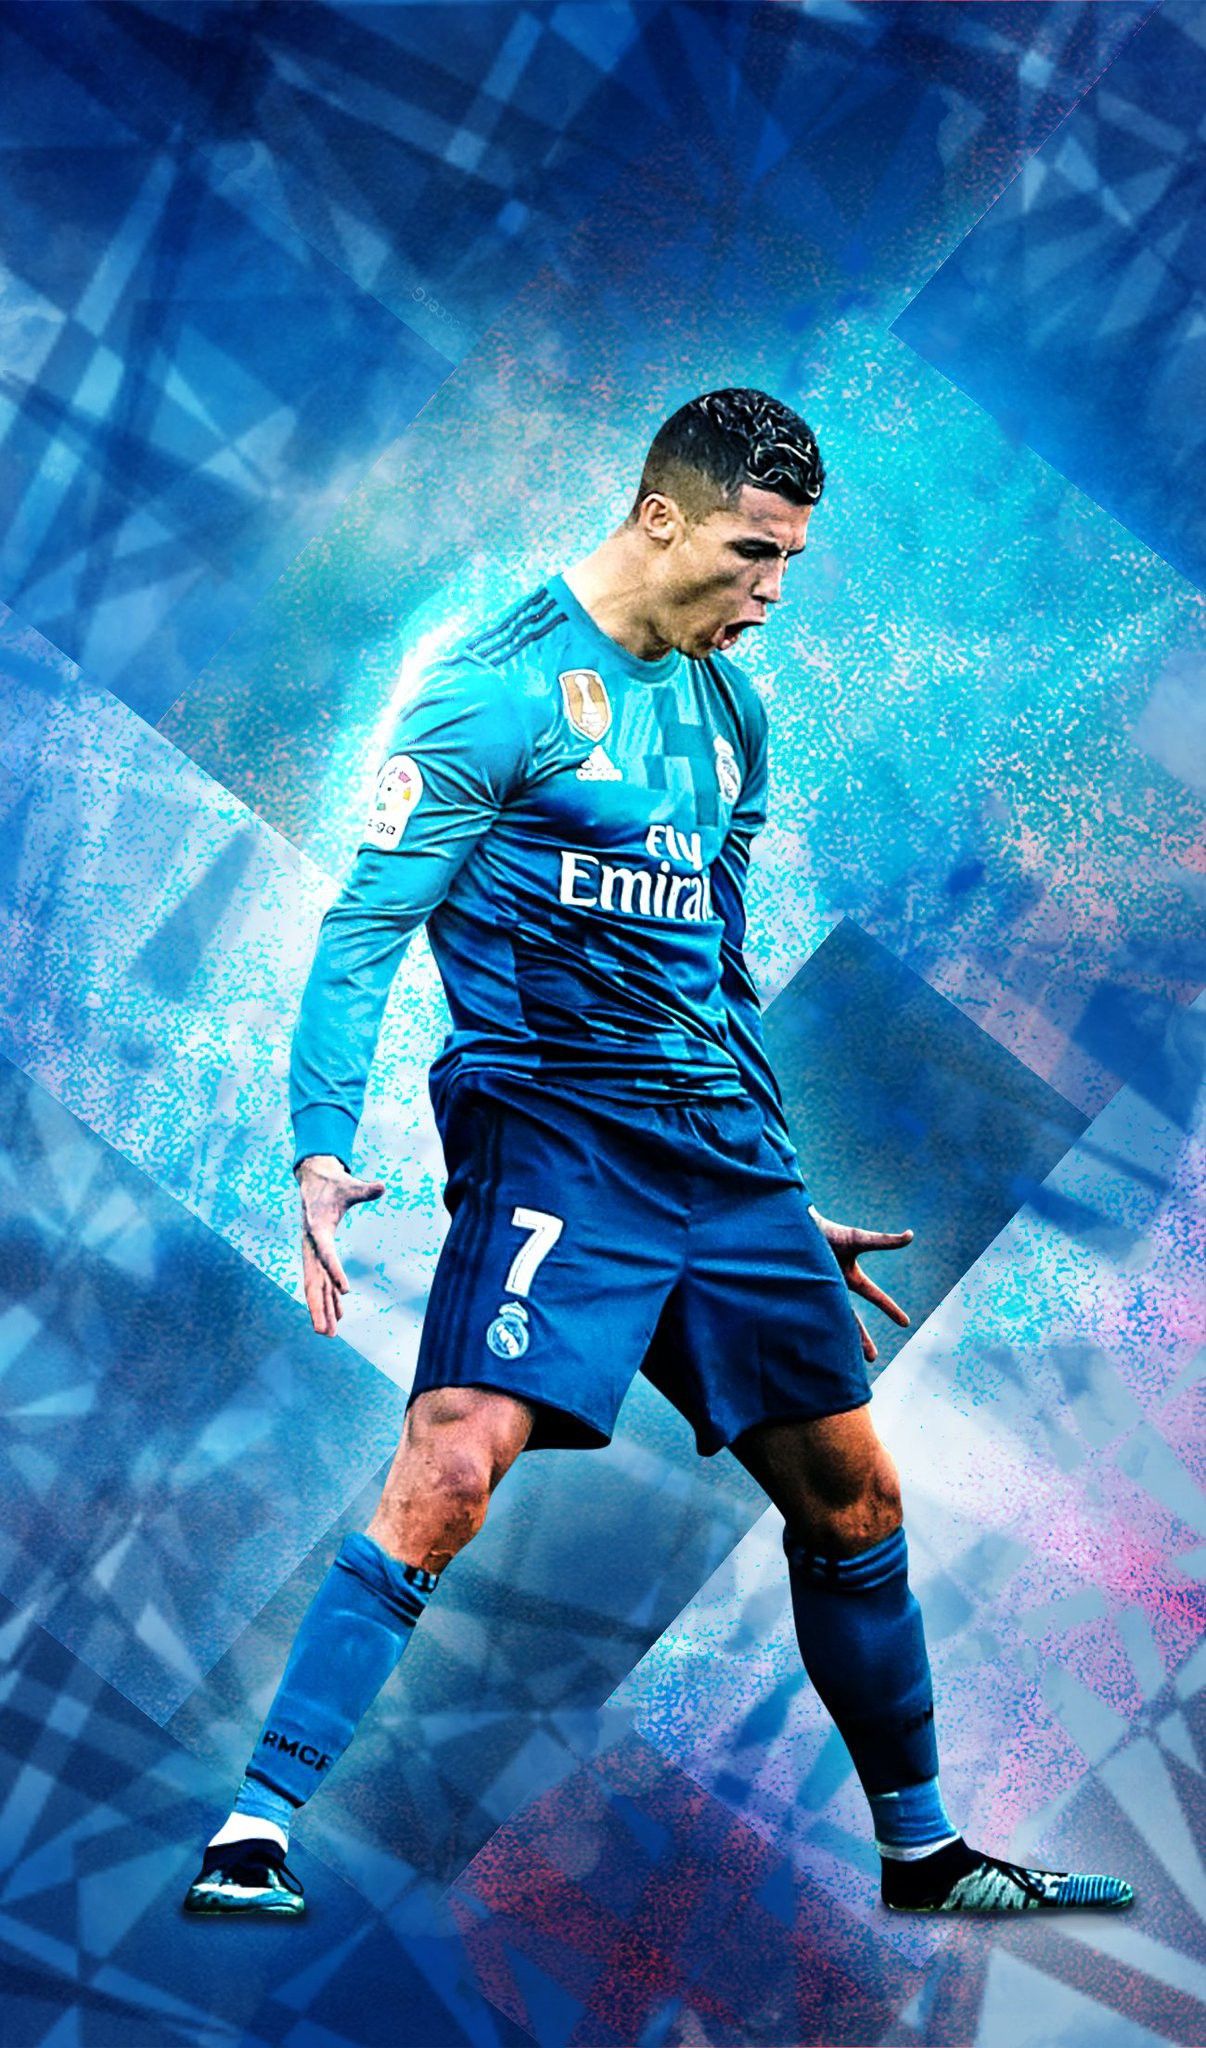 Cristiano Ronaldo Portugal national team Wallpaper ID3264